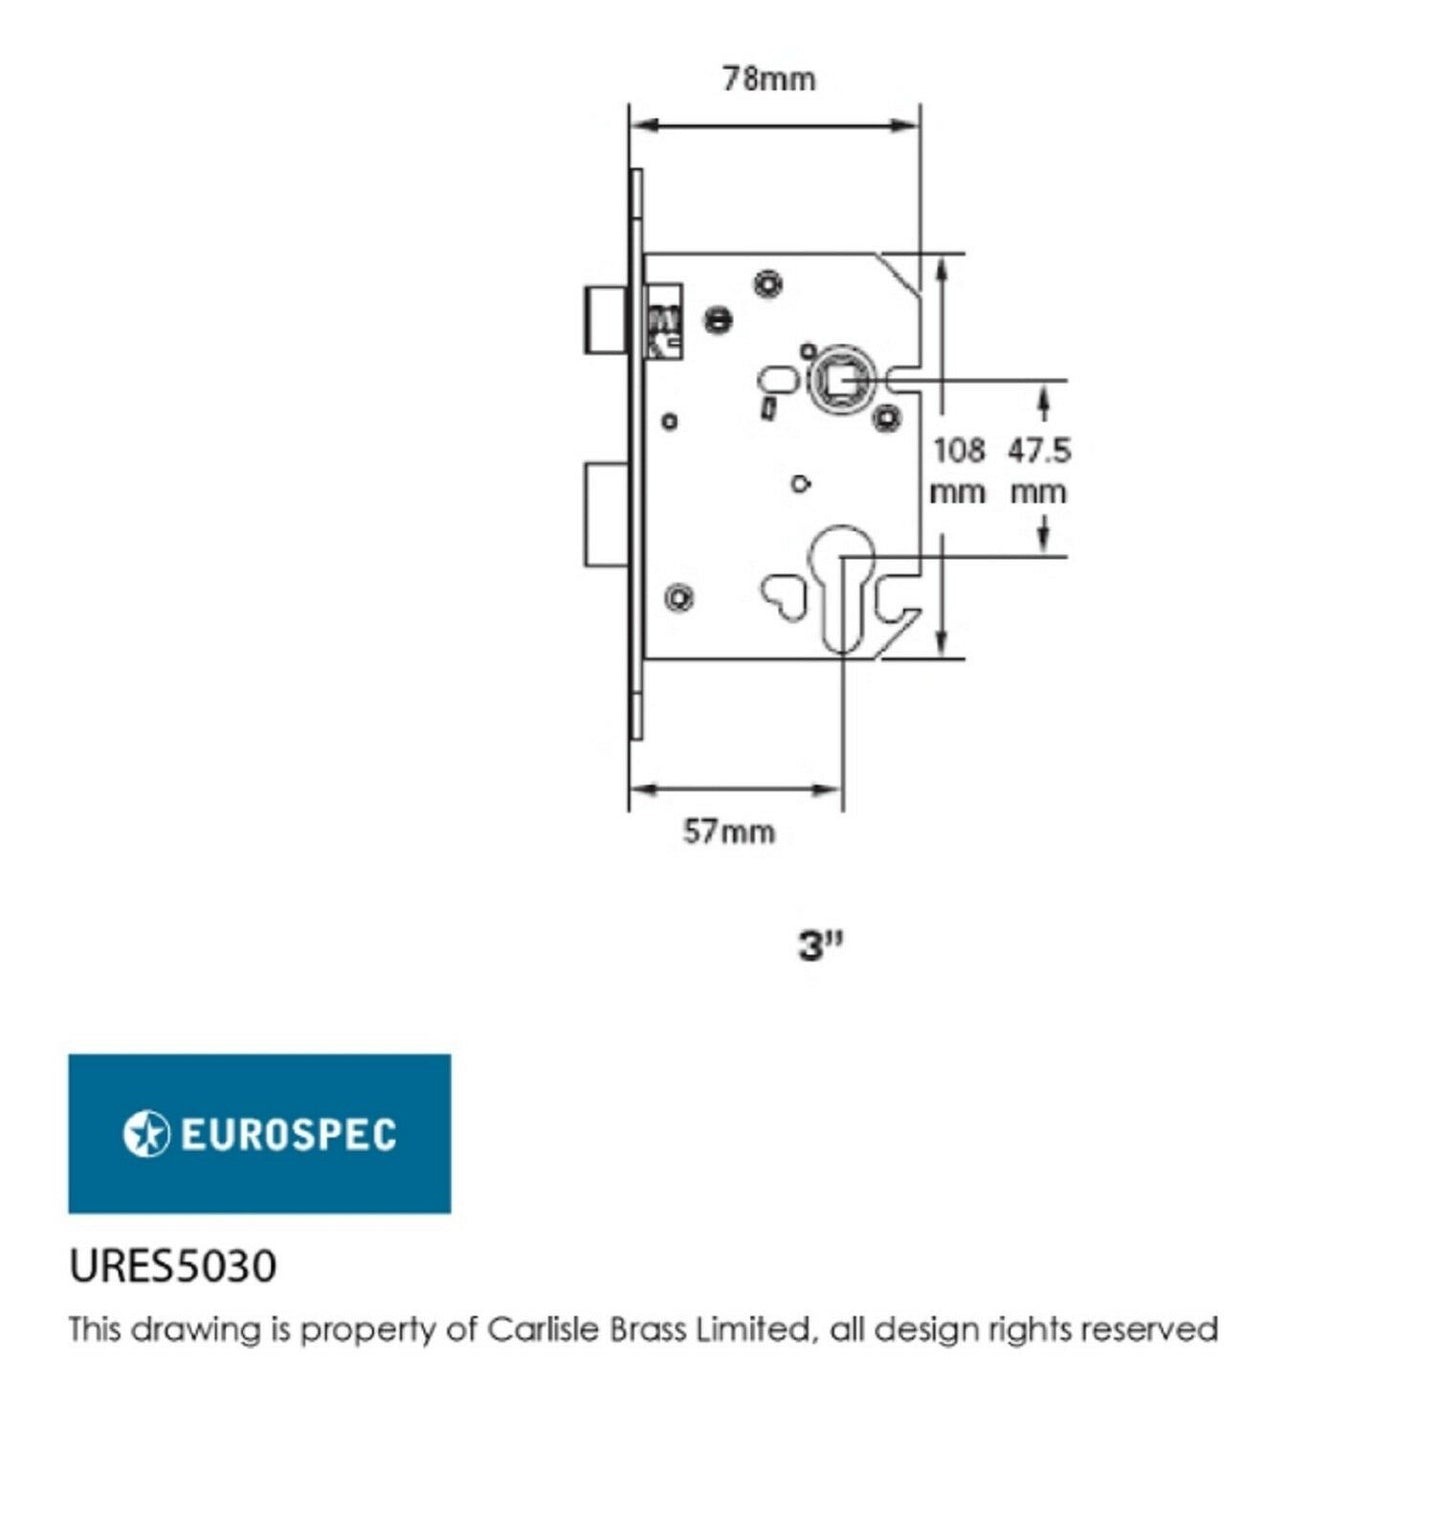 Carlisle Brass - UROS50 - Eurospec Universal Replacement Oval Profile Sashlock